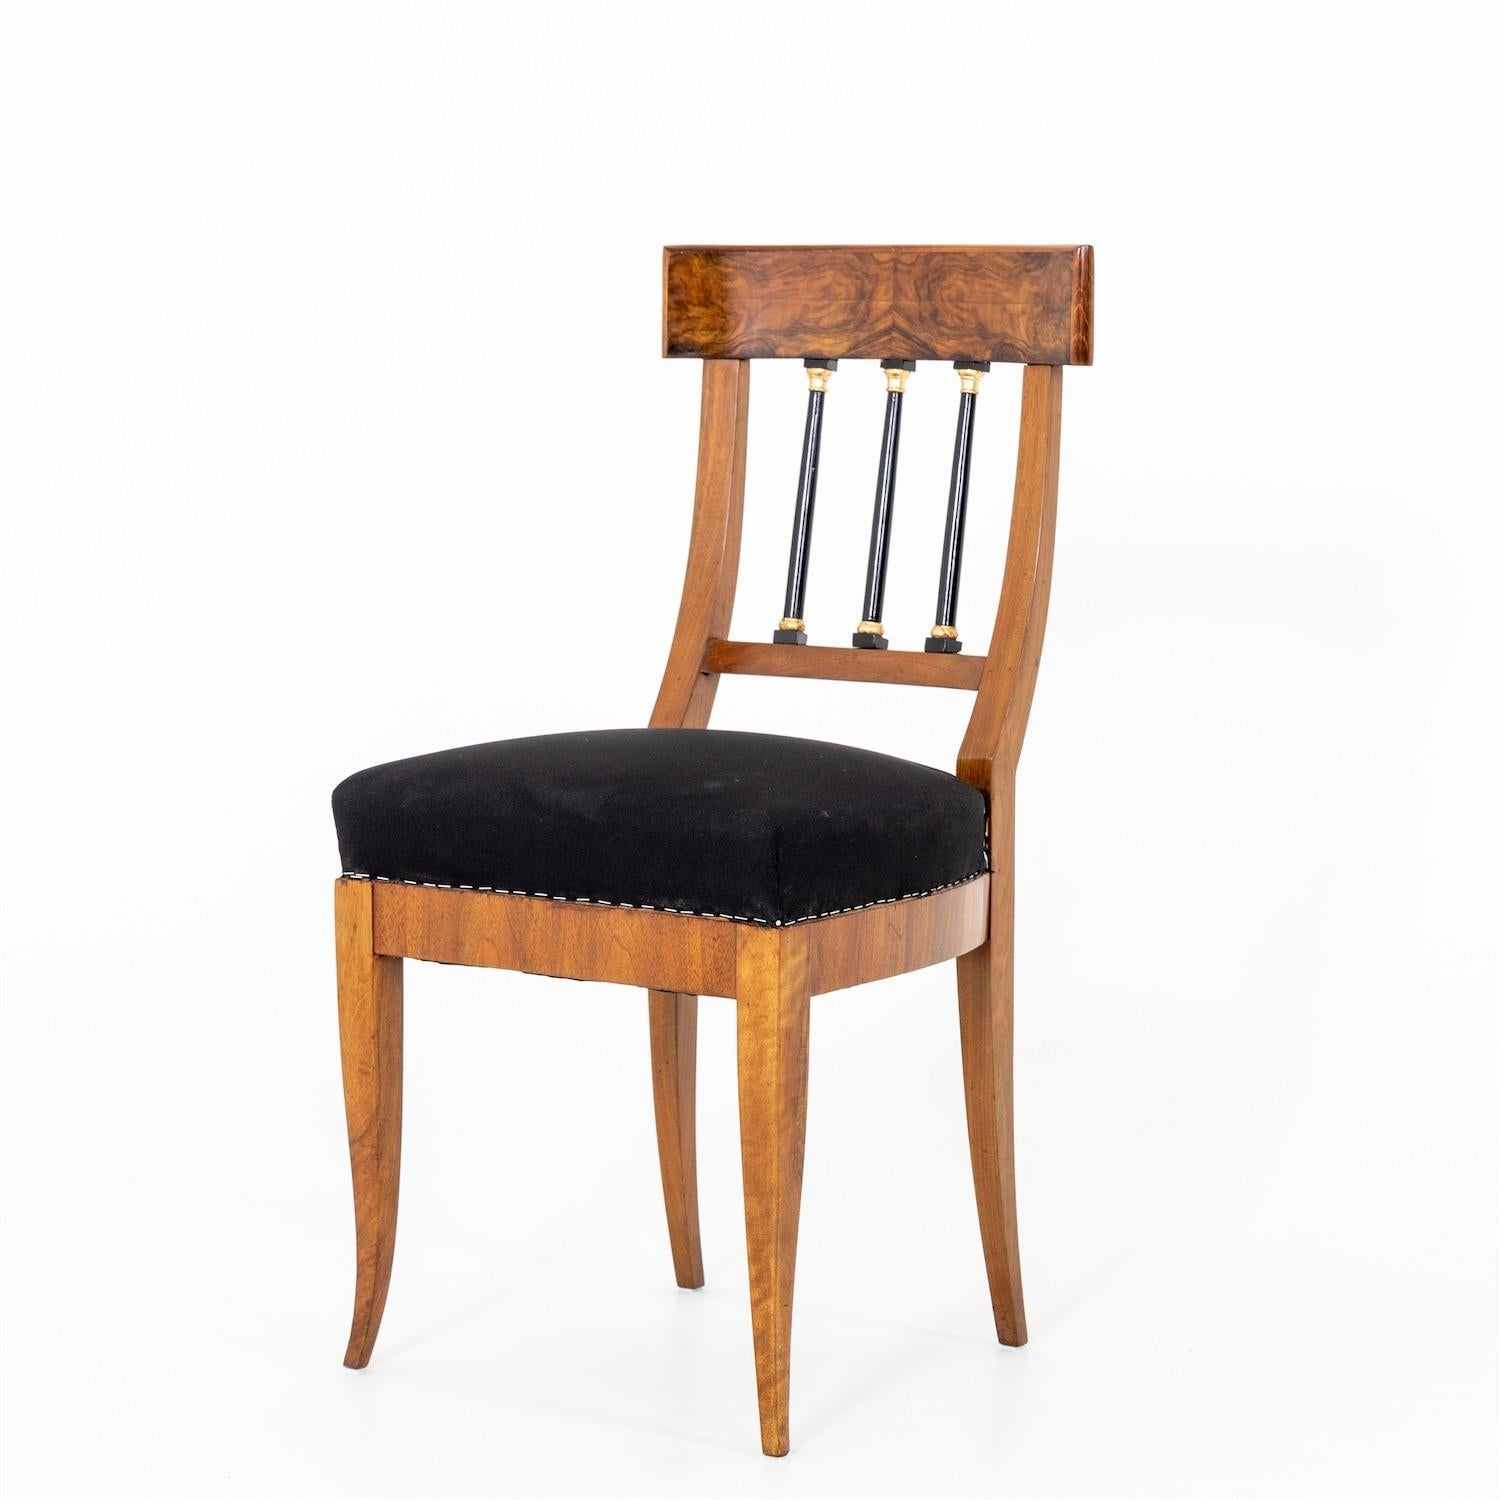 Early 19th Century Biedermeier Chair, around 1820